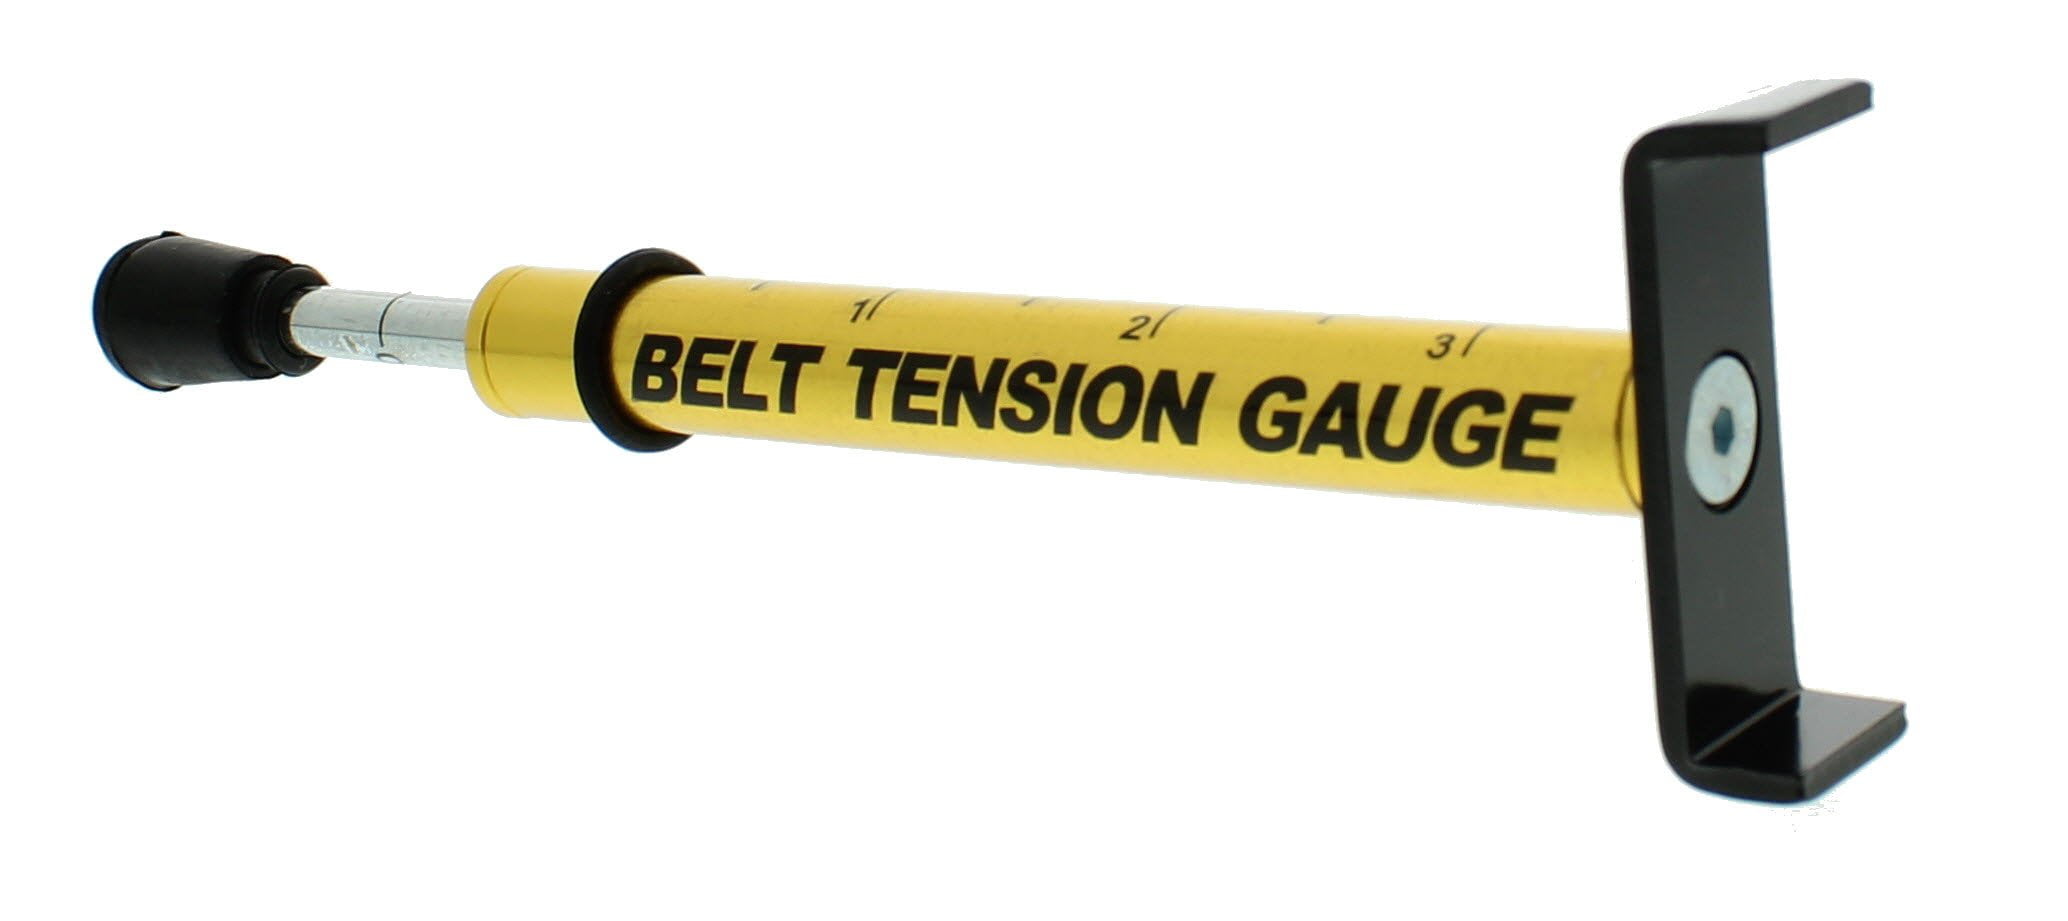 Belt Tension Gauge Ubicaciondepersonas Cdmx Gob Mx